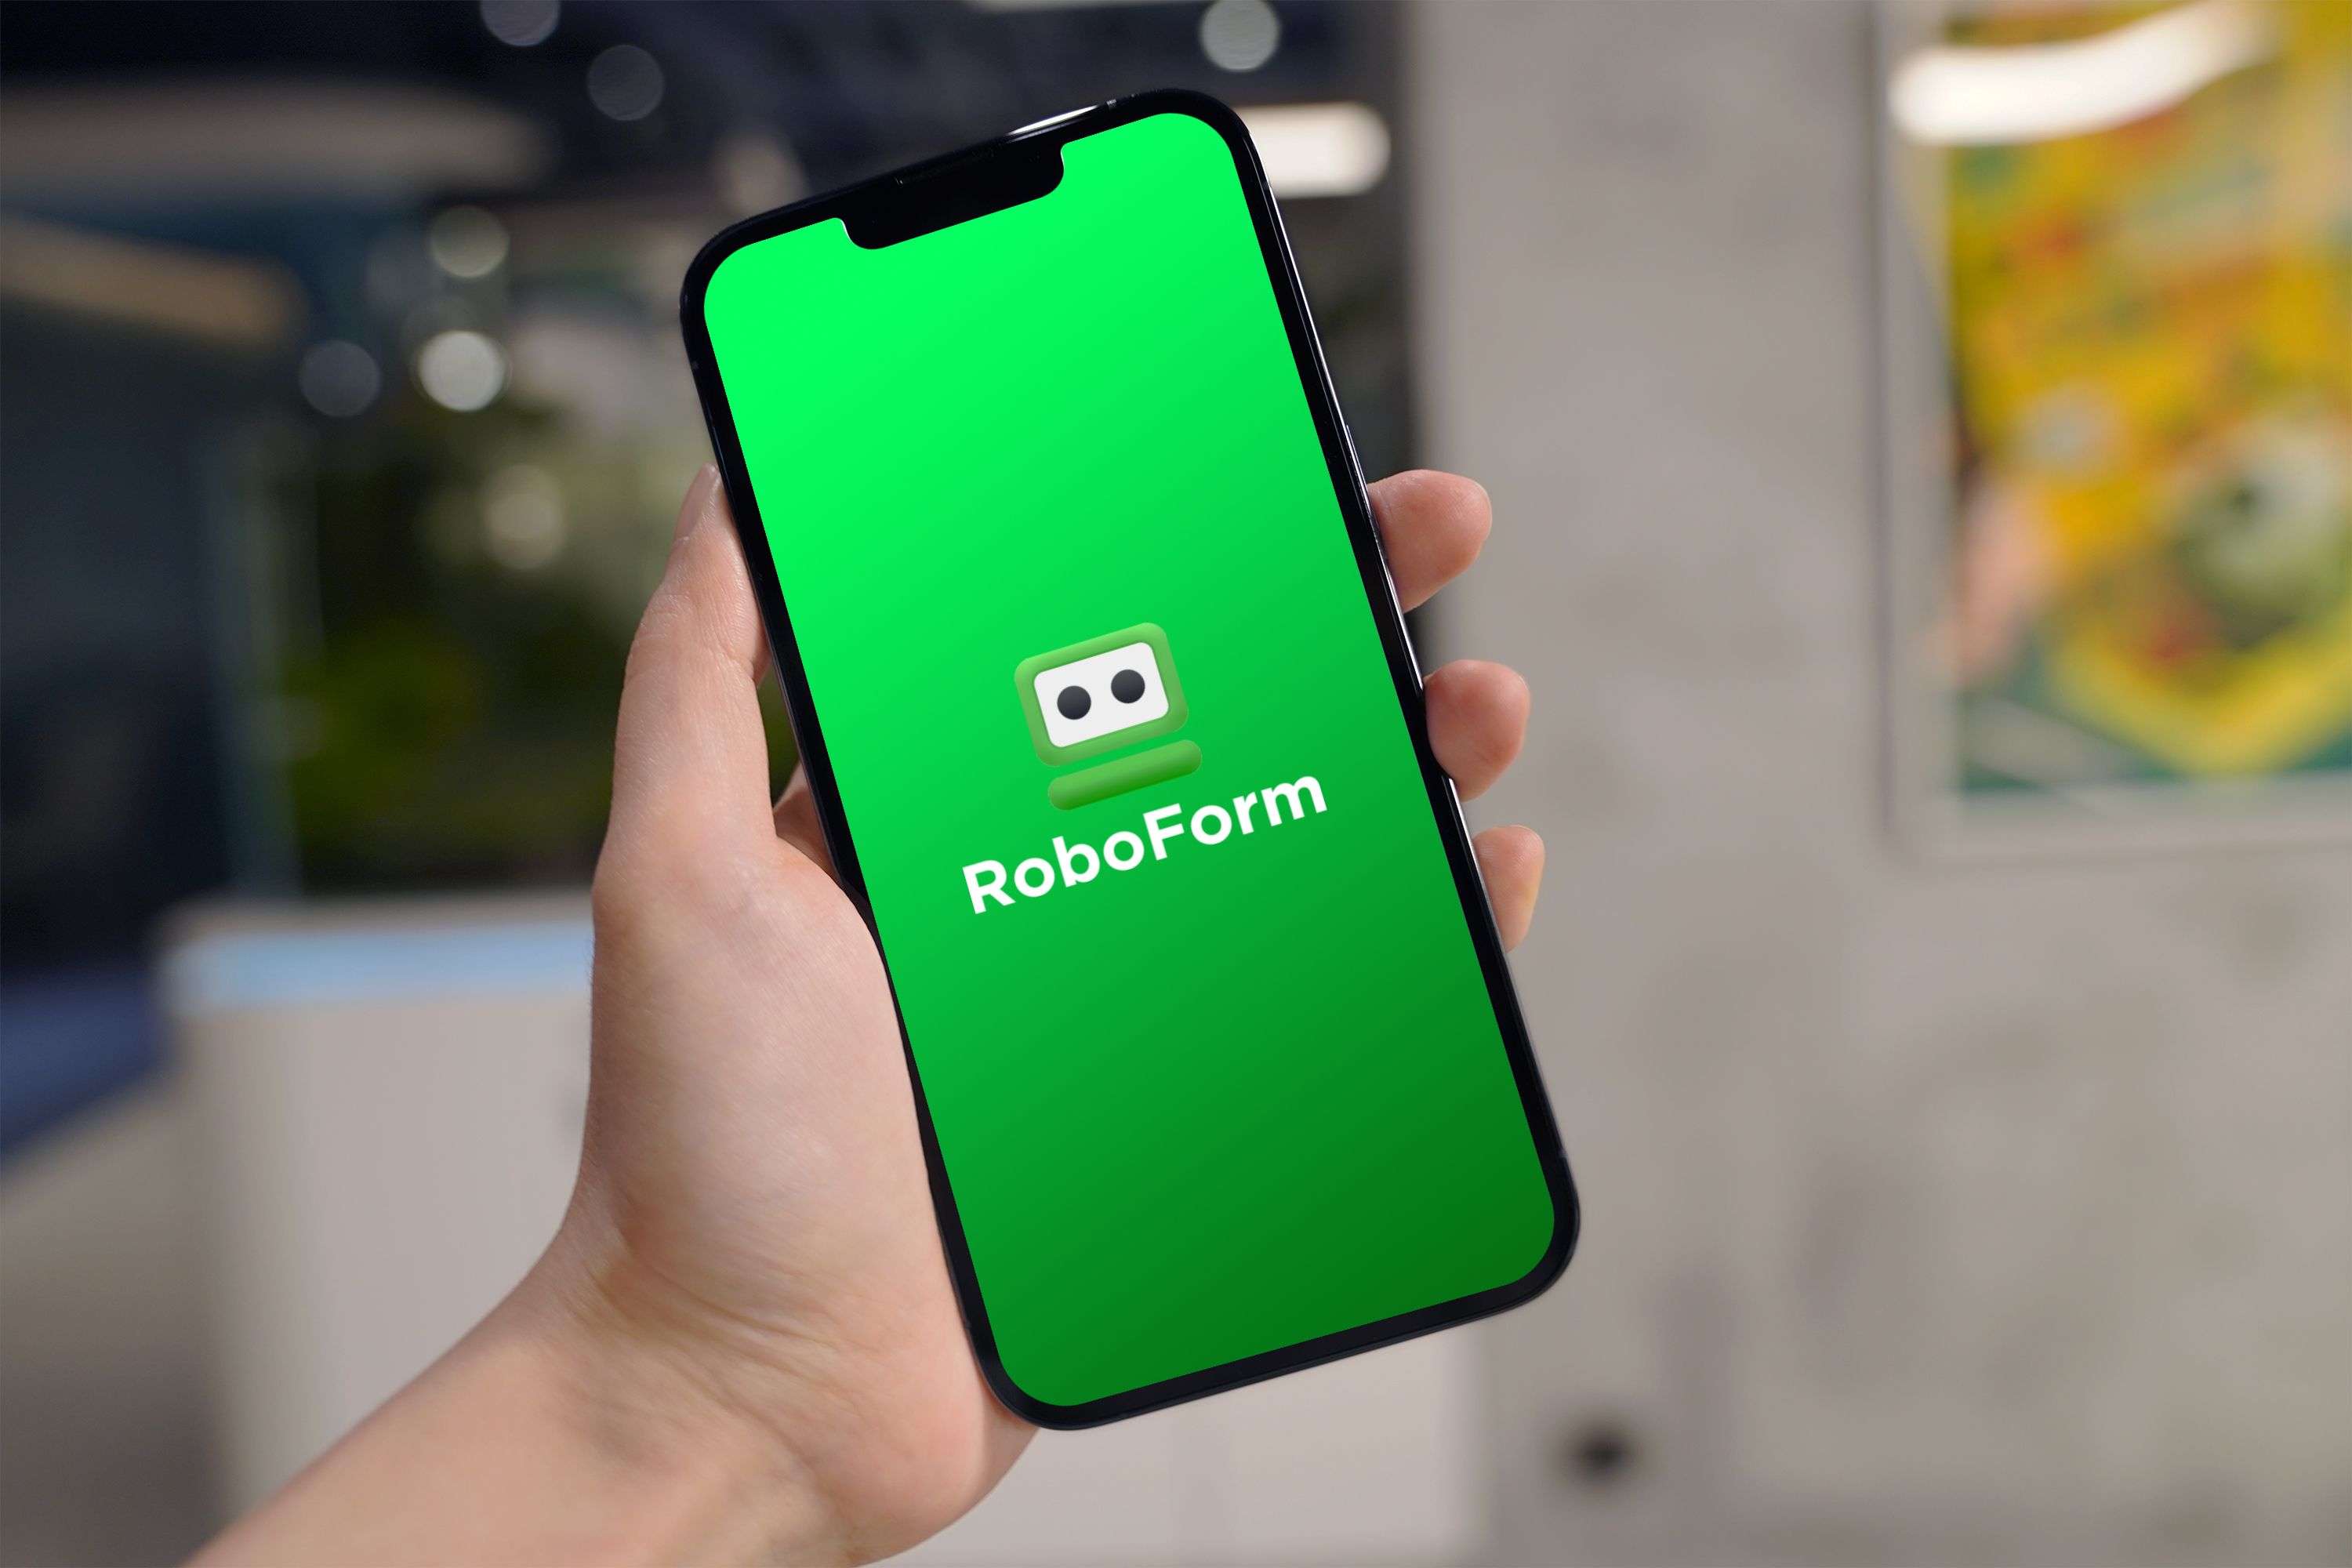 Domina a RoboForm no iPhone como ninguém!